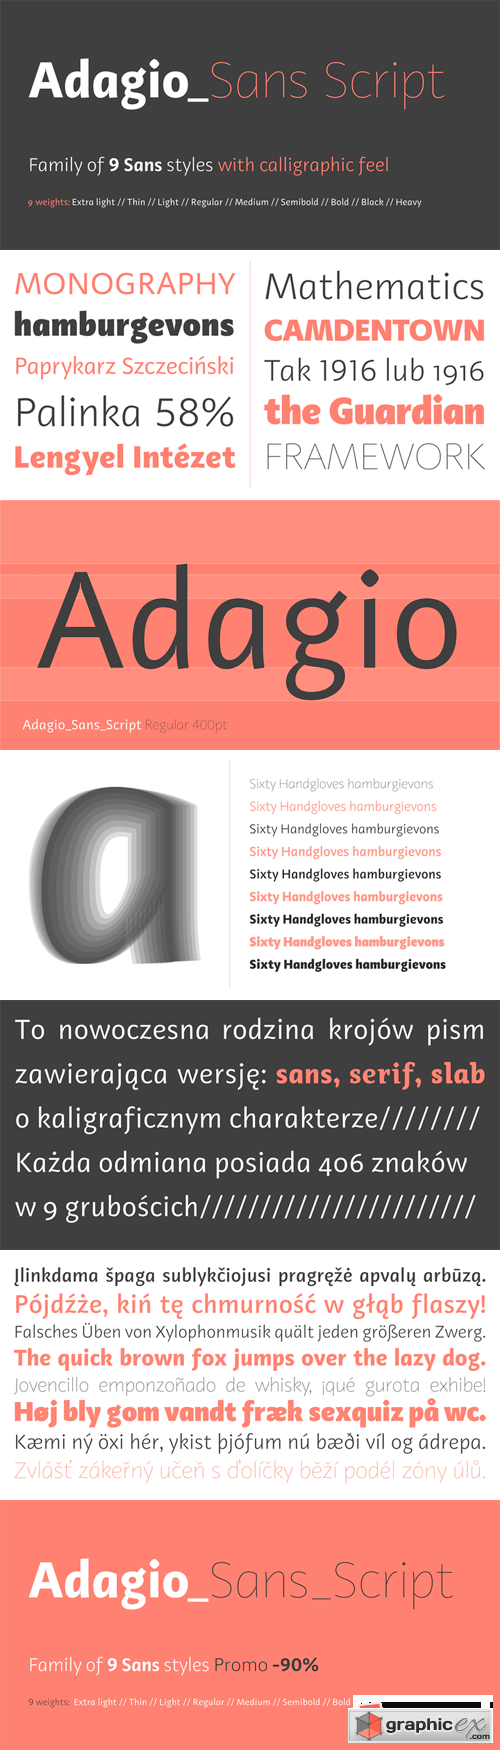 Adagio Sans Script Font Family - 9 Fonts for $140